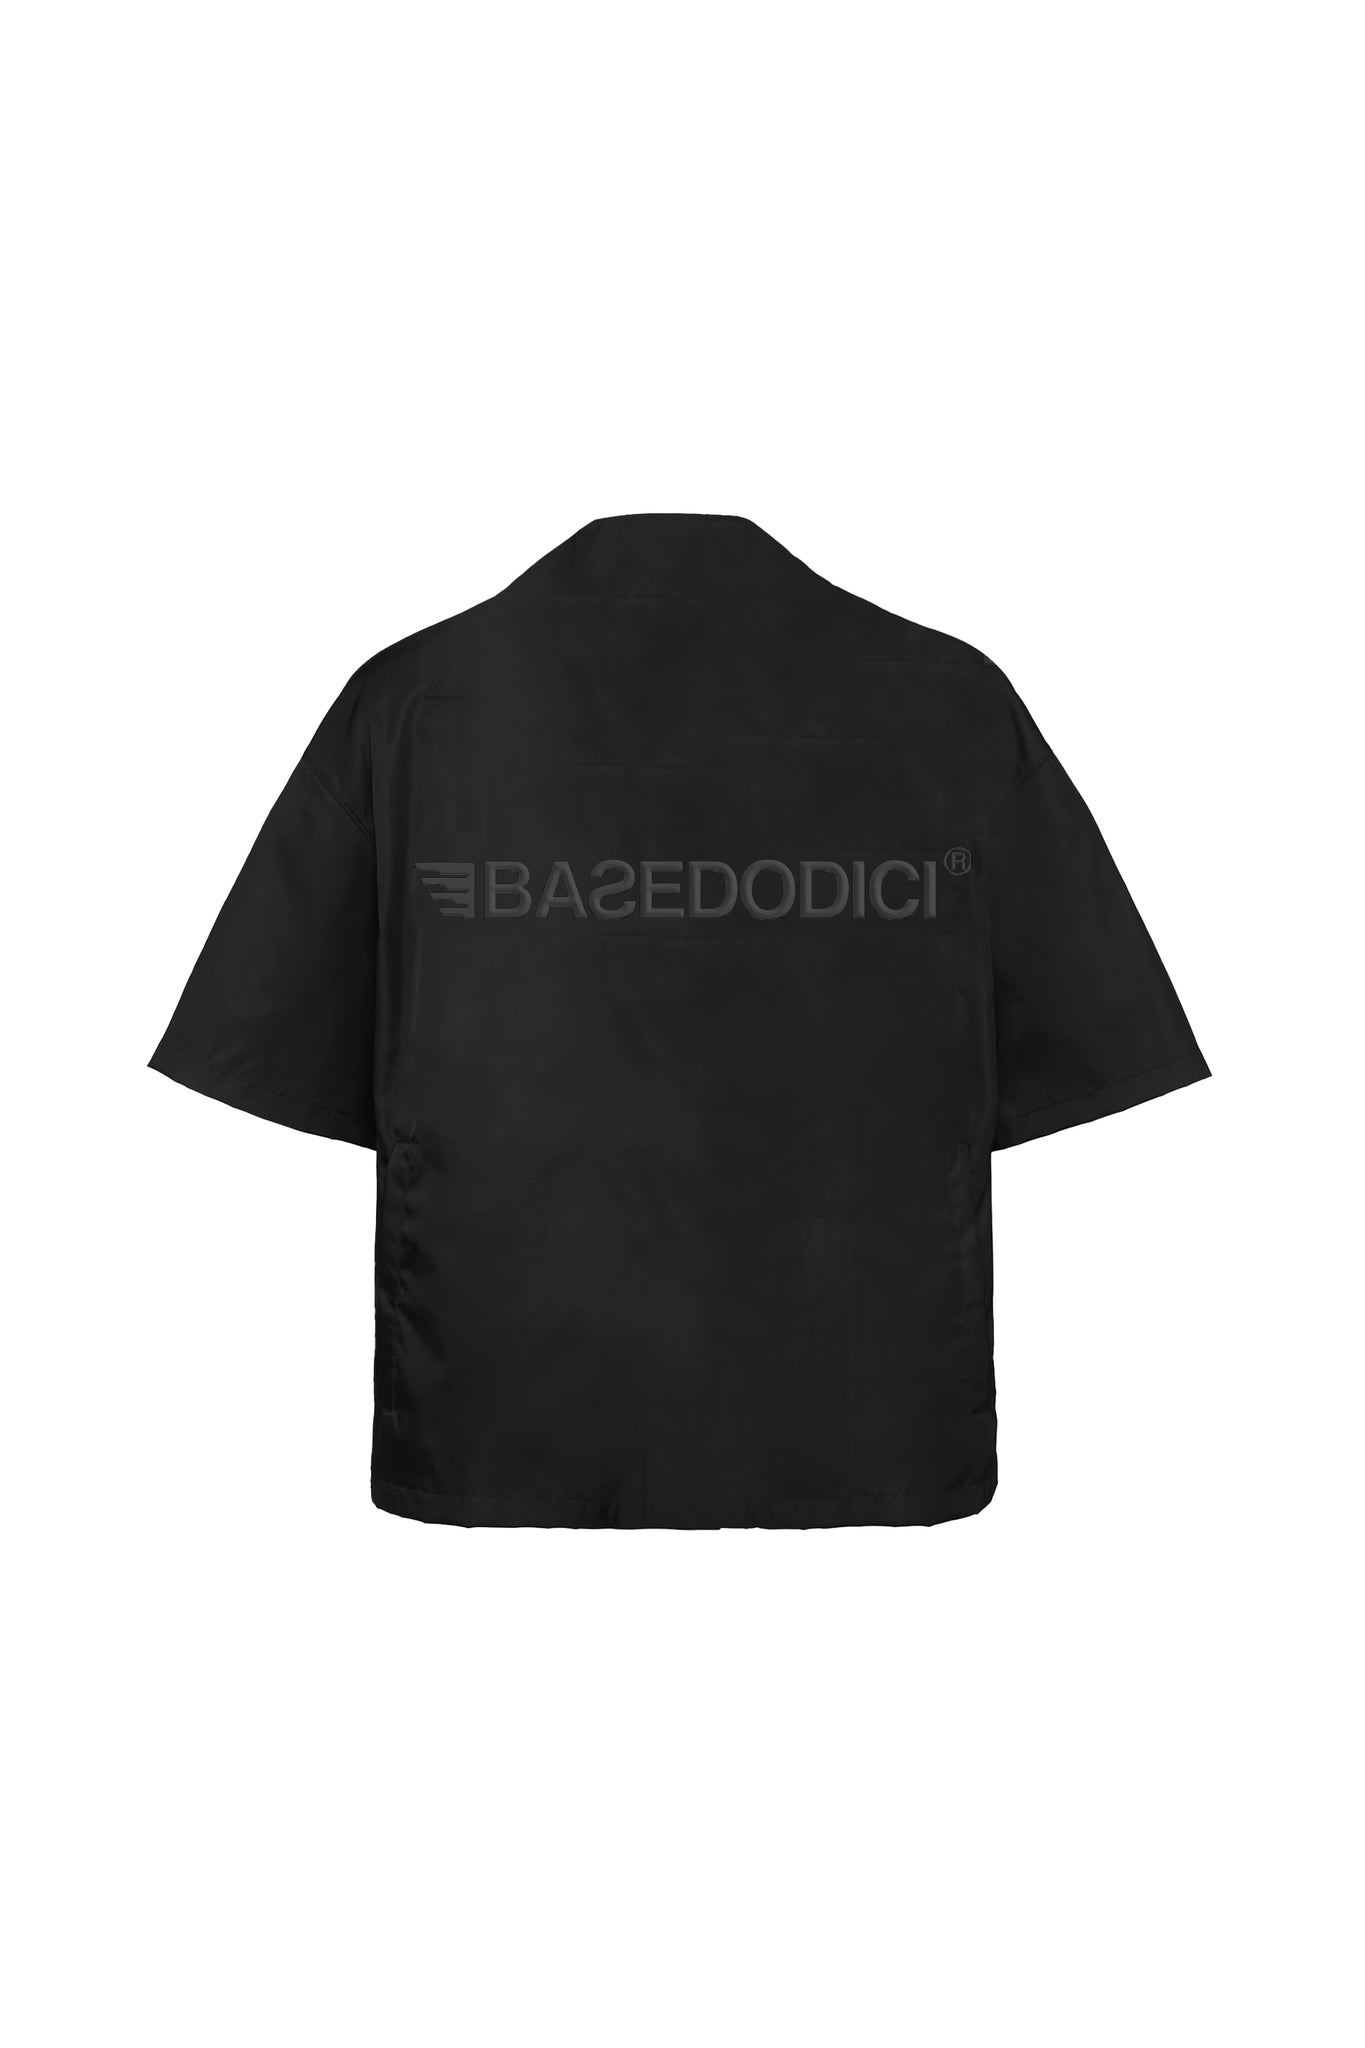 “FORSUMMER” Base Black Shirt